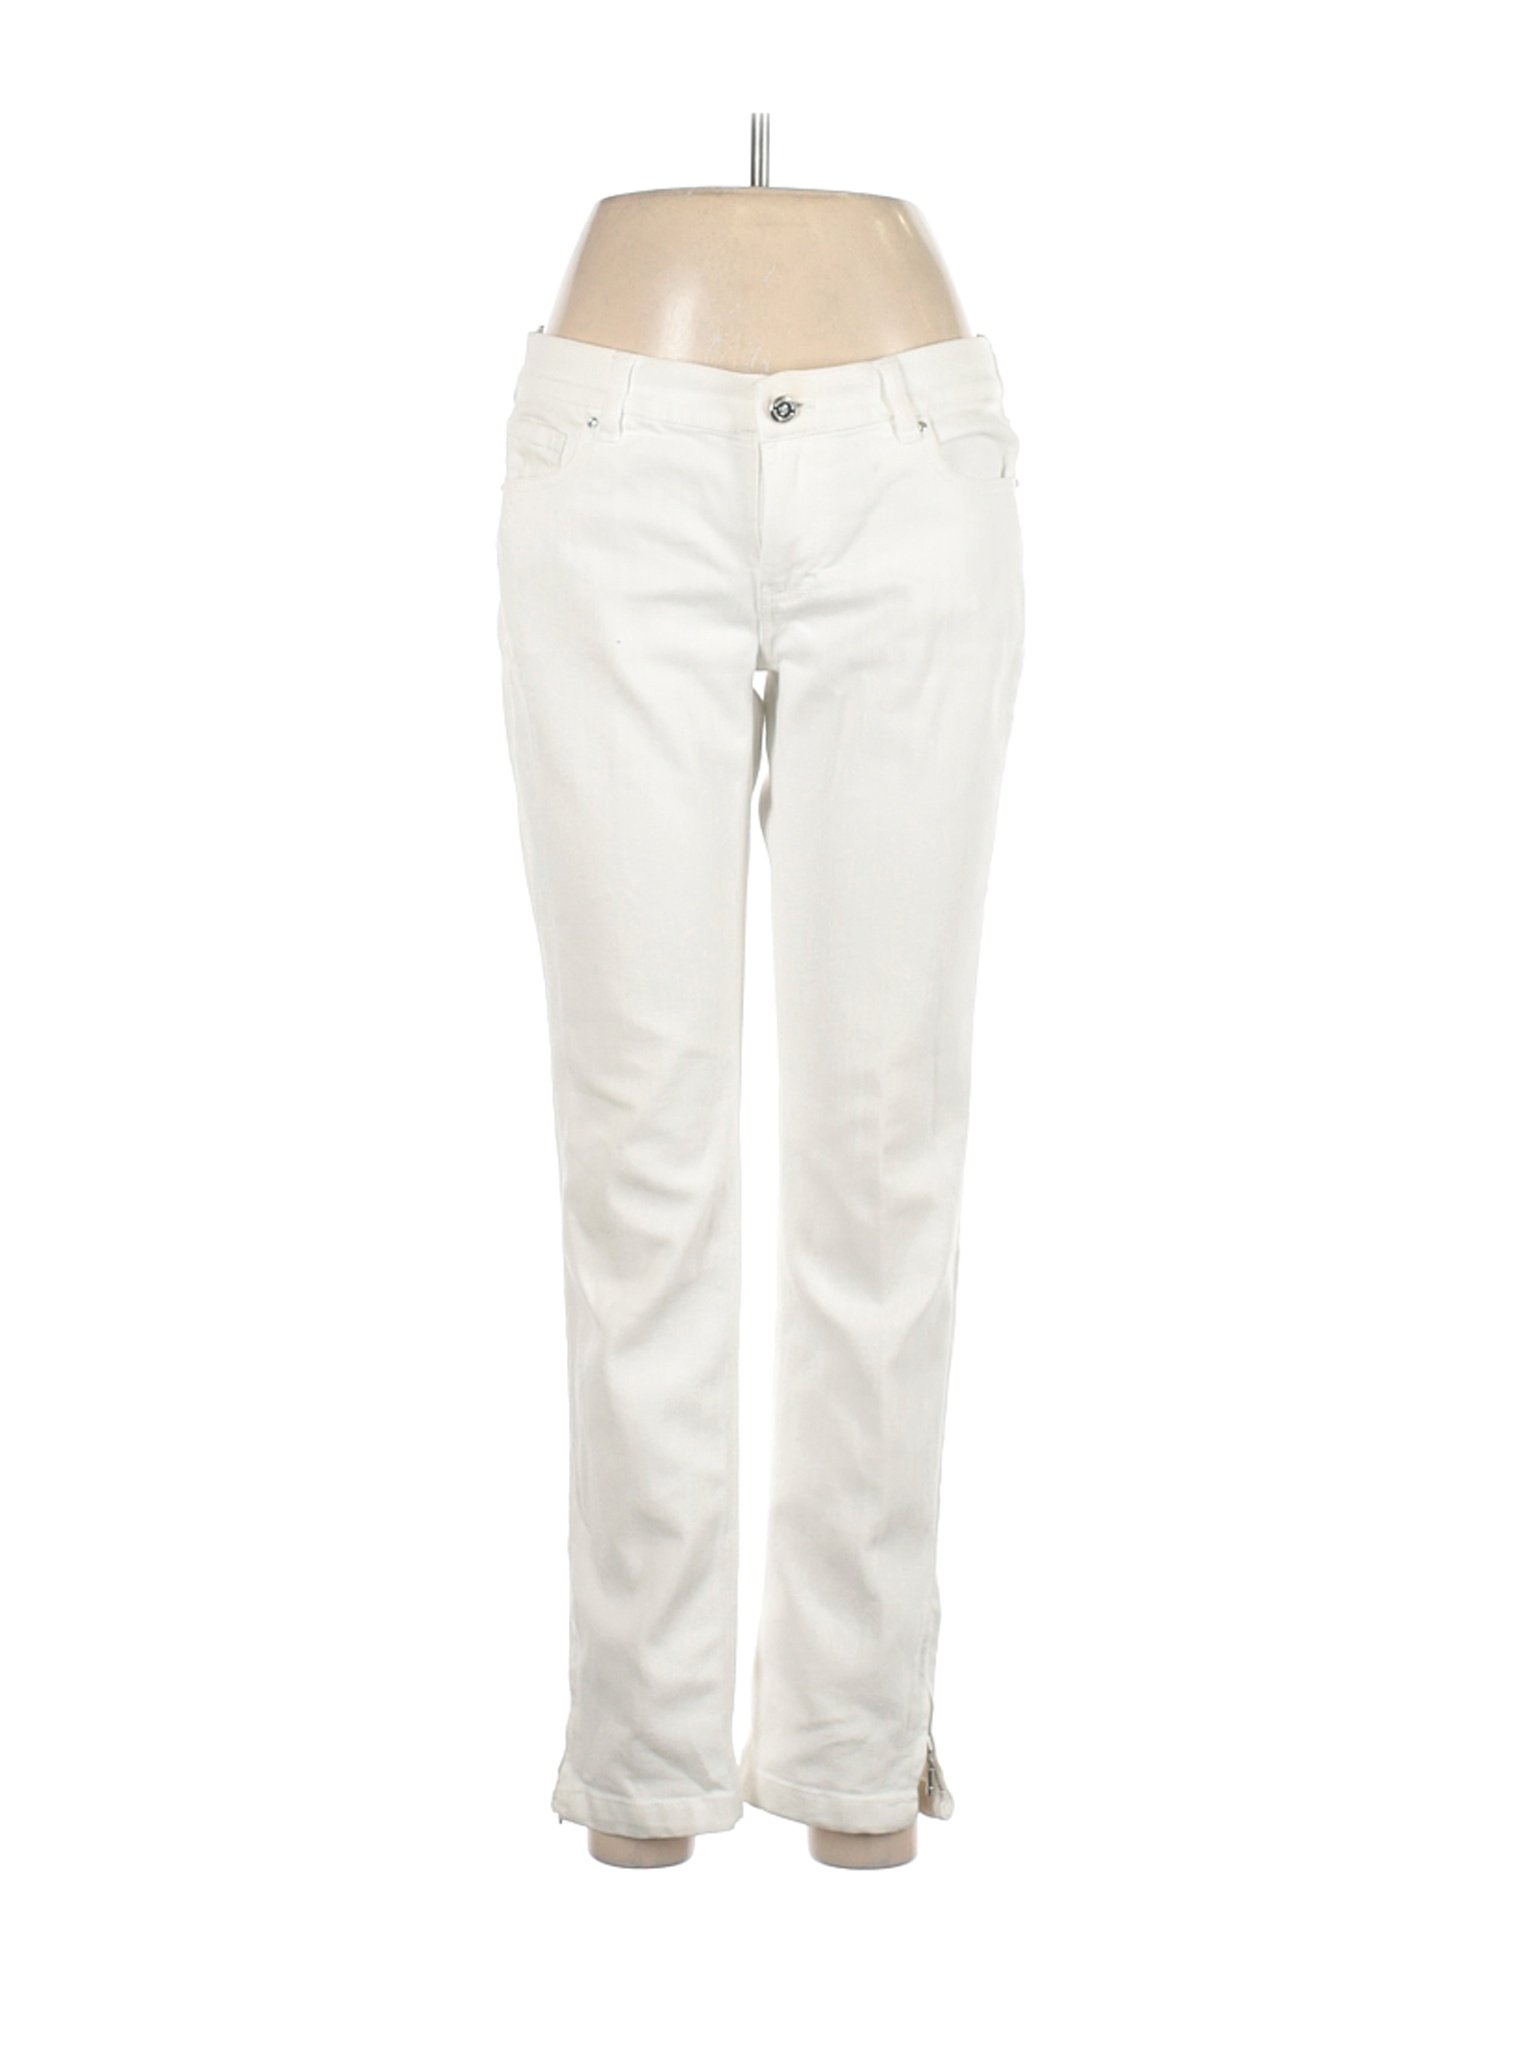 White House Black Market Women White Jeans 6 | eBay